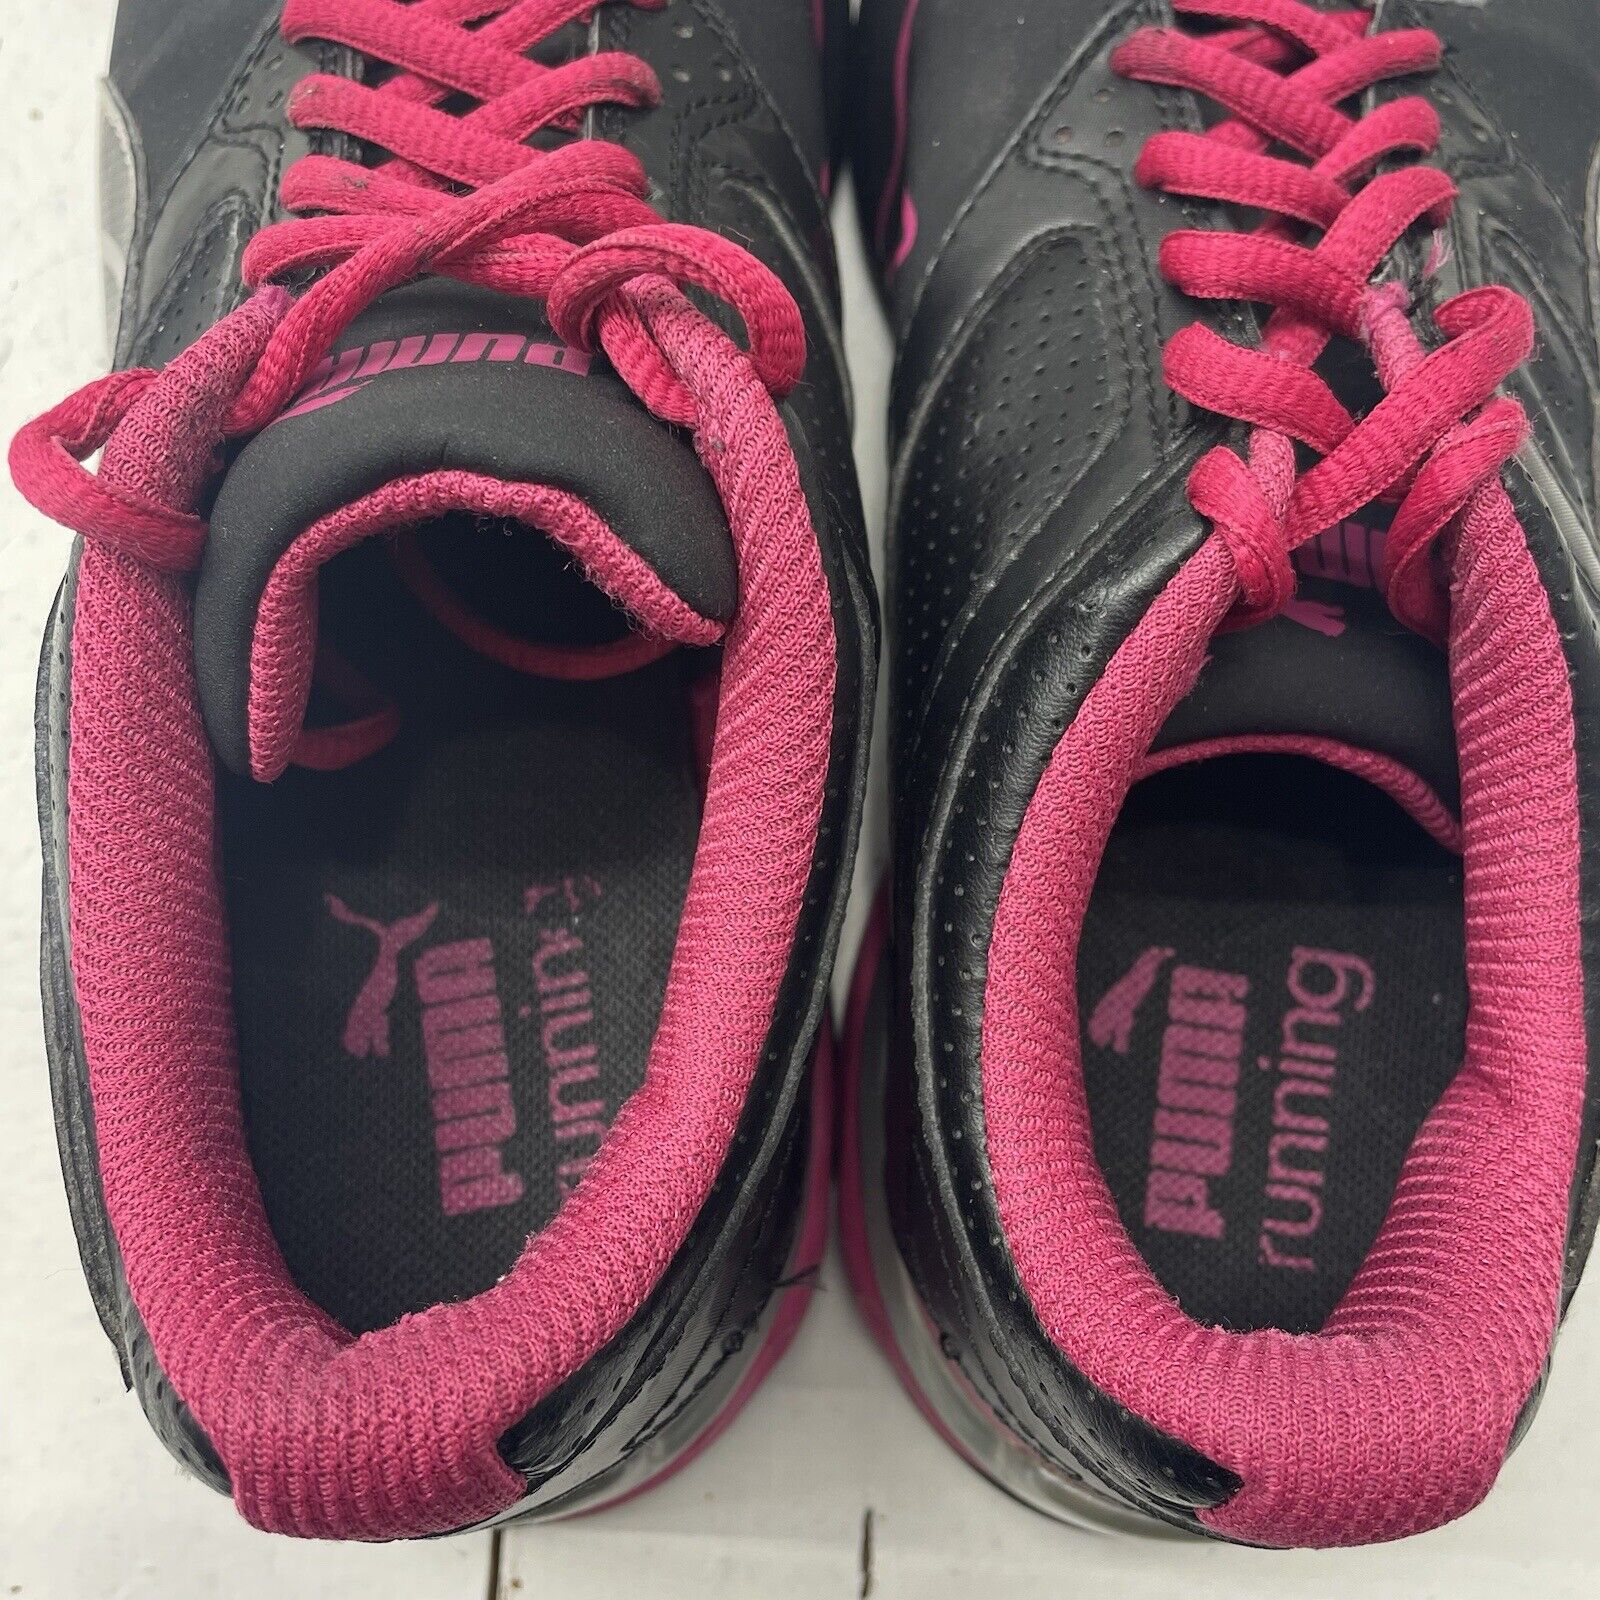 Pink Sneakers - exchange Puma 186905 05 Black Women Silver beyond 6 Tazon Shoes Athletic